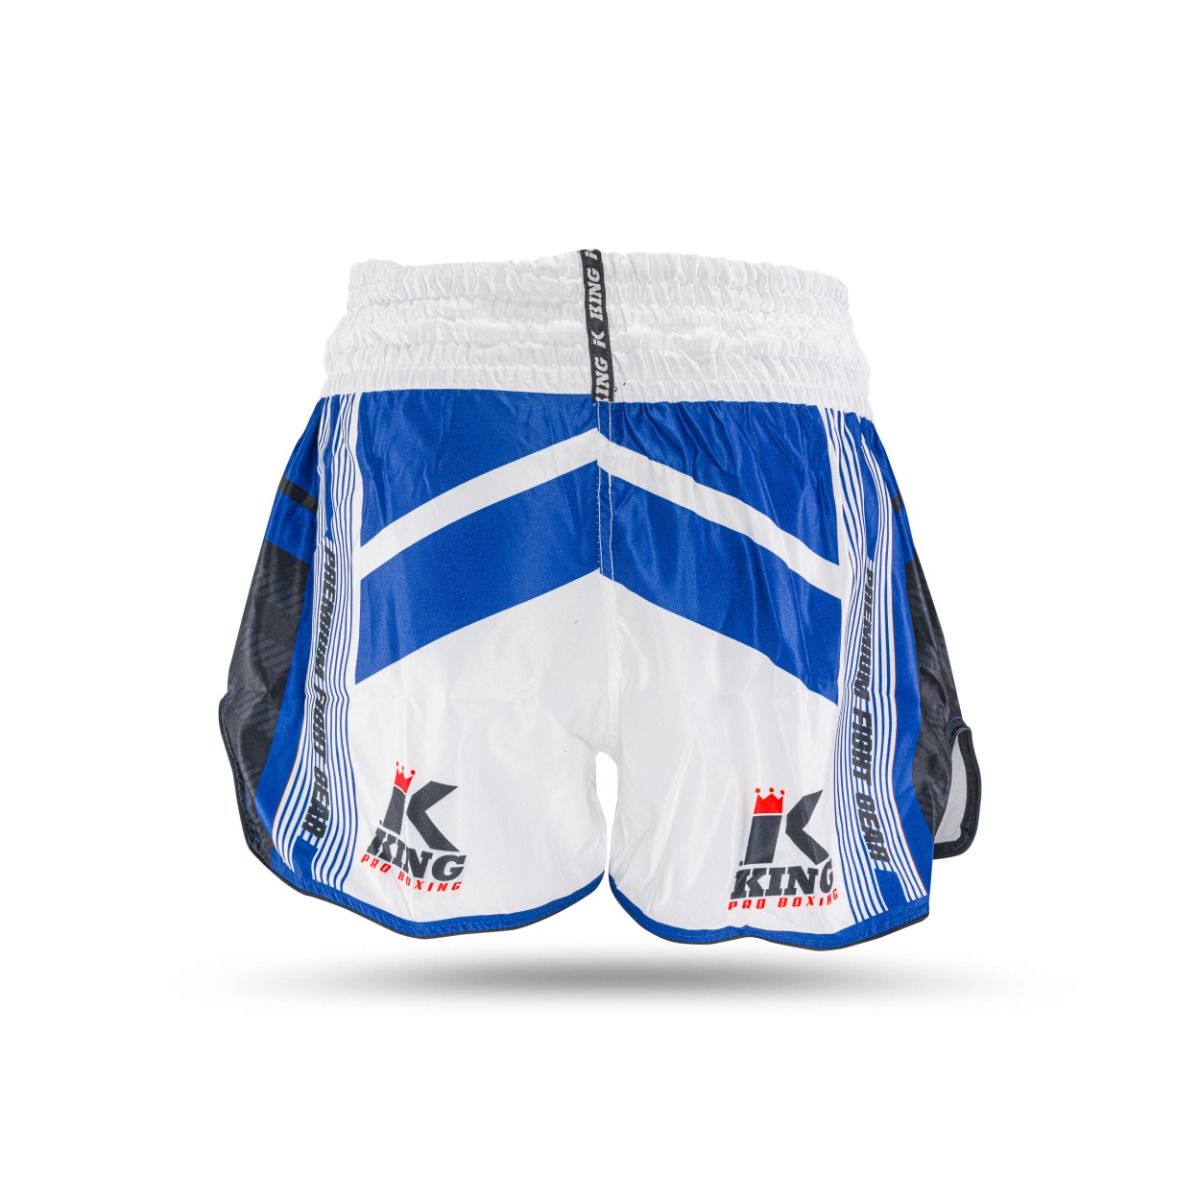 King endurance kick boksbroek wit blauw - Booster Fight Store